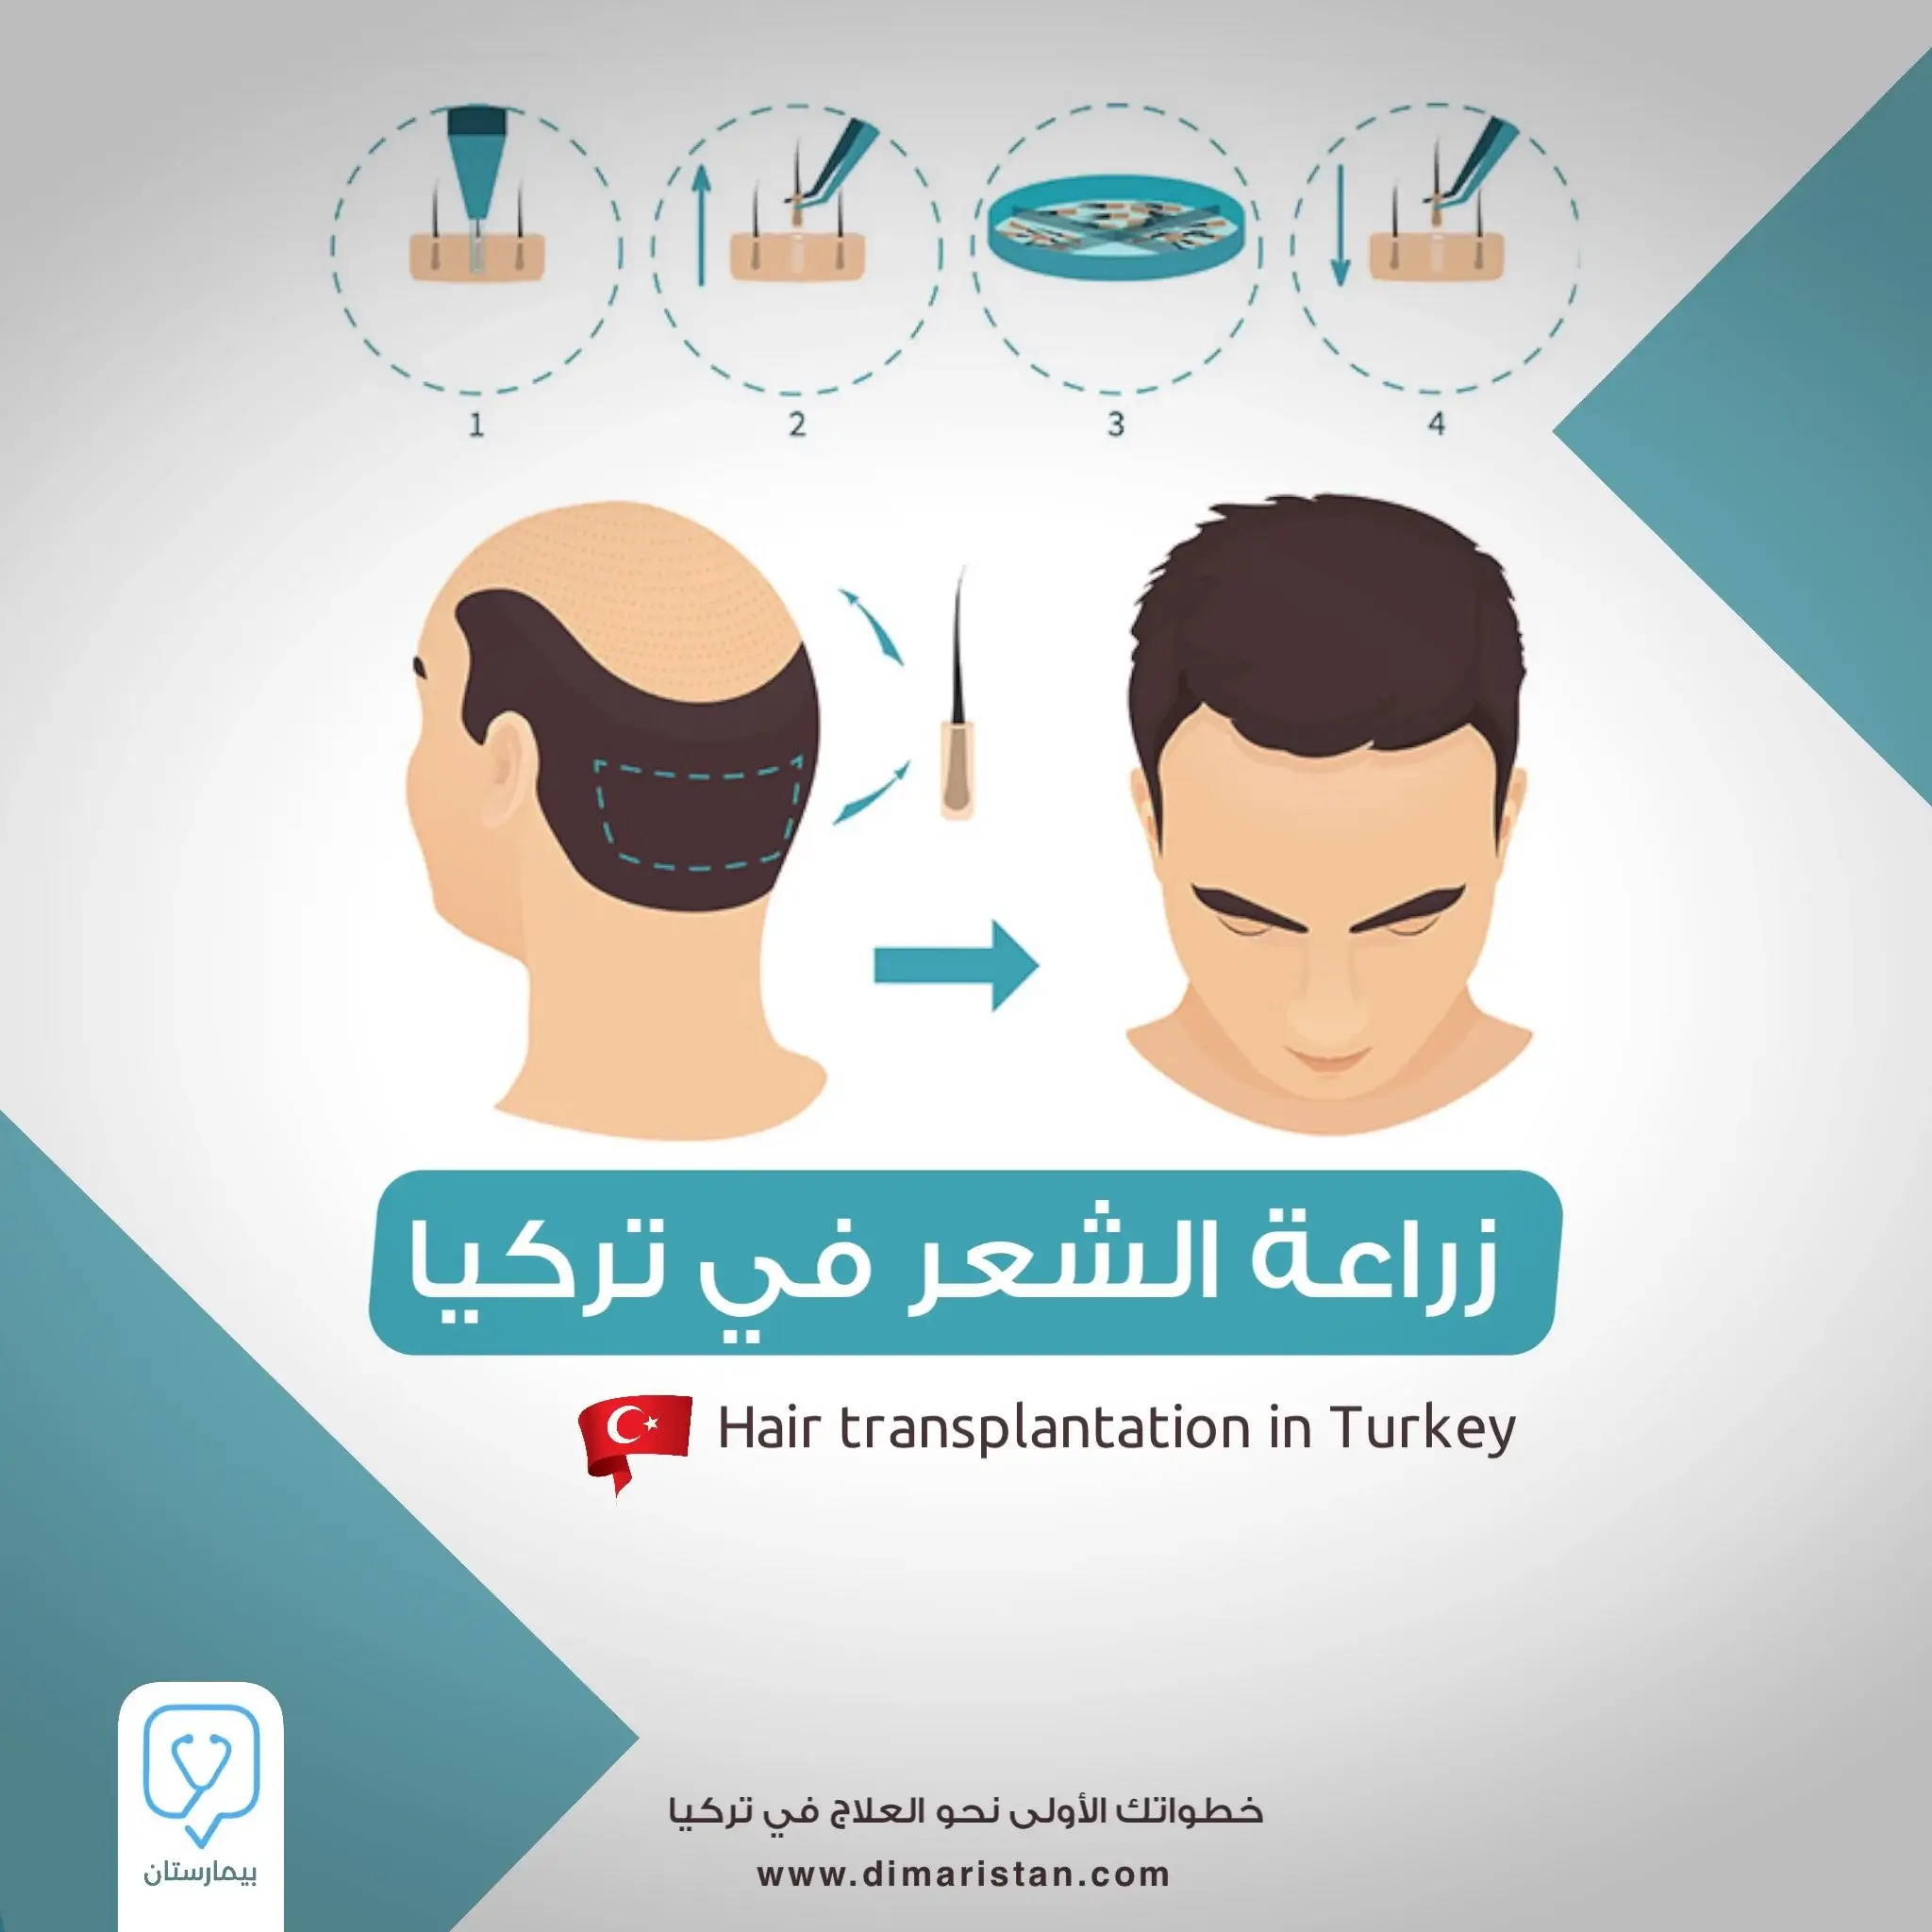 Hair transplantation in Turkey